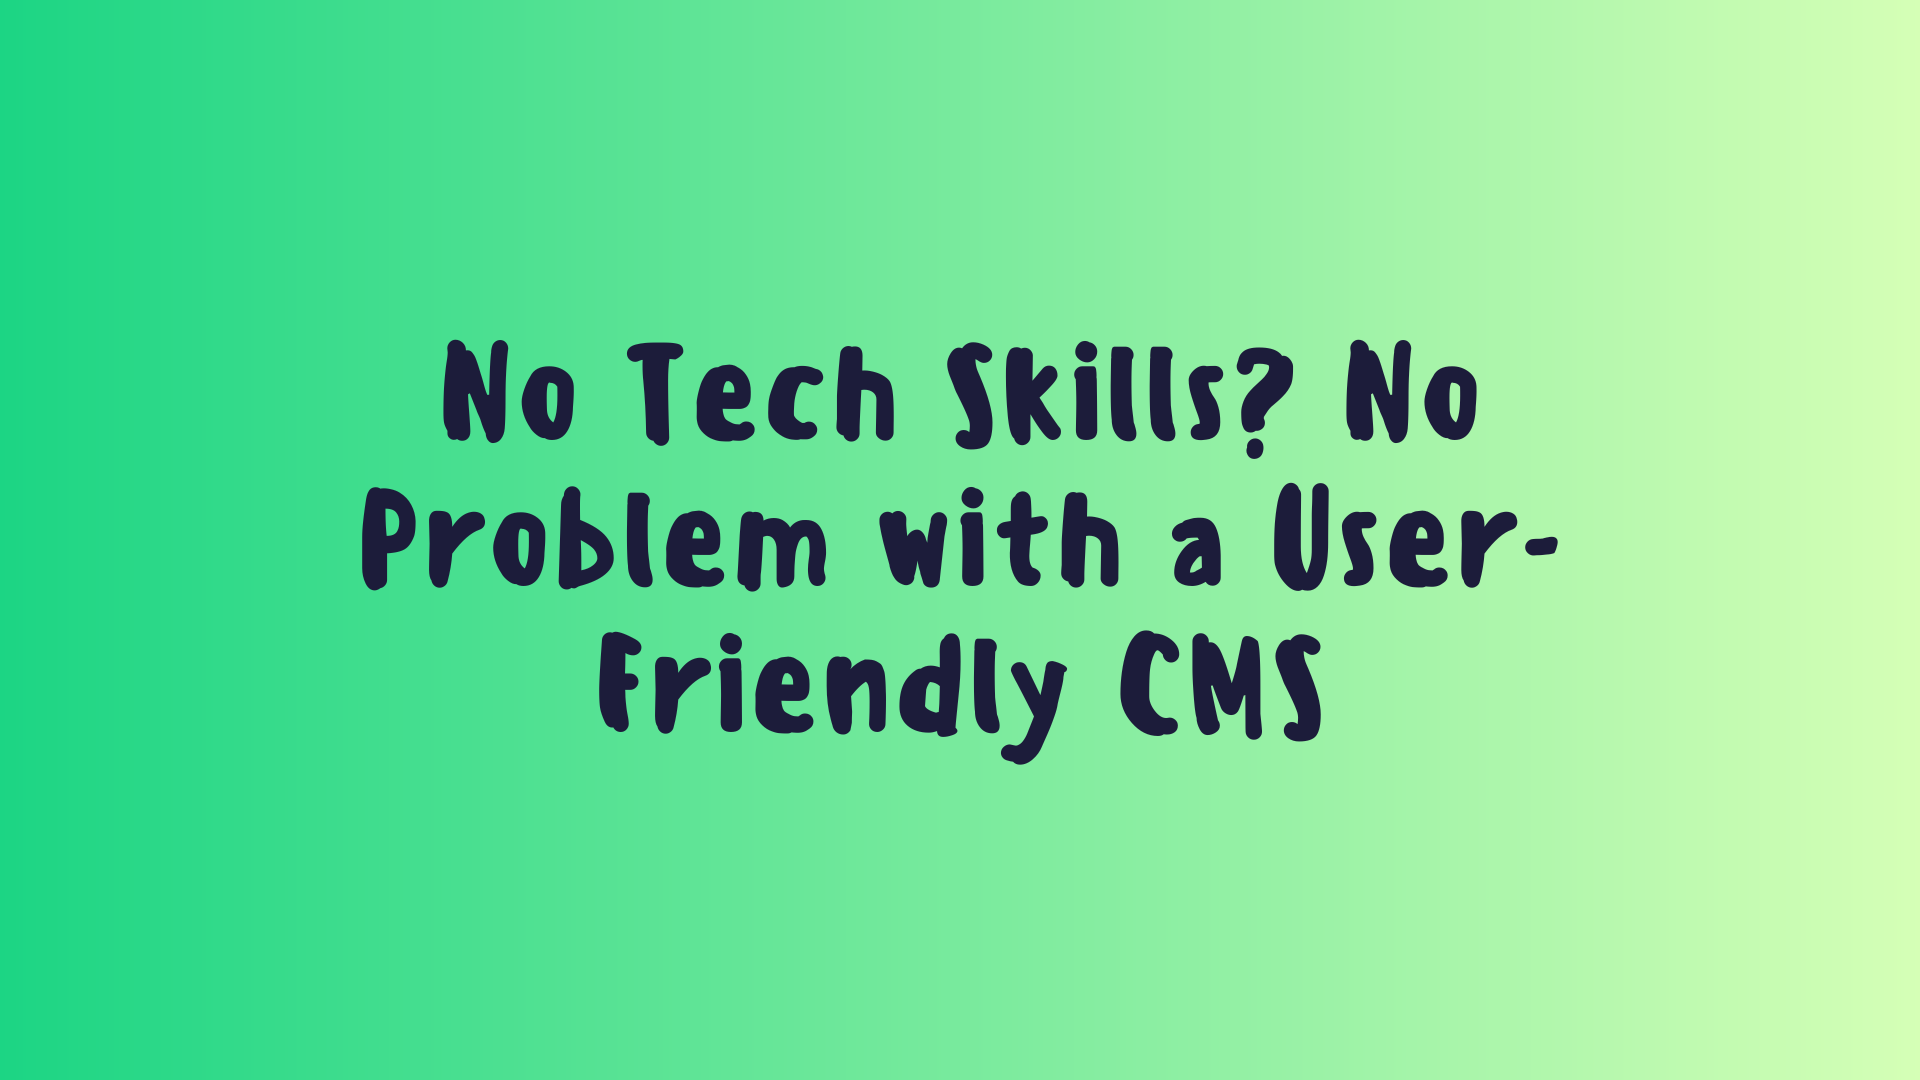 No Tech Skills? No Problem with a User-Friendly CMS